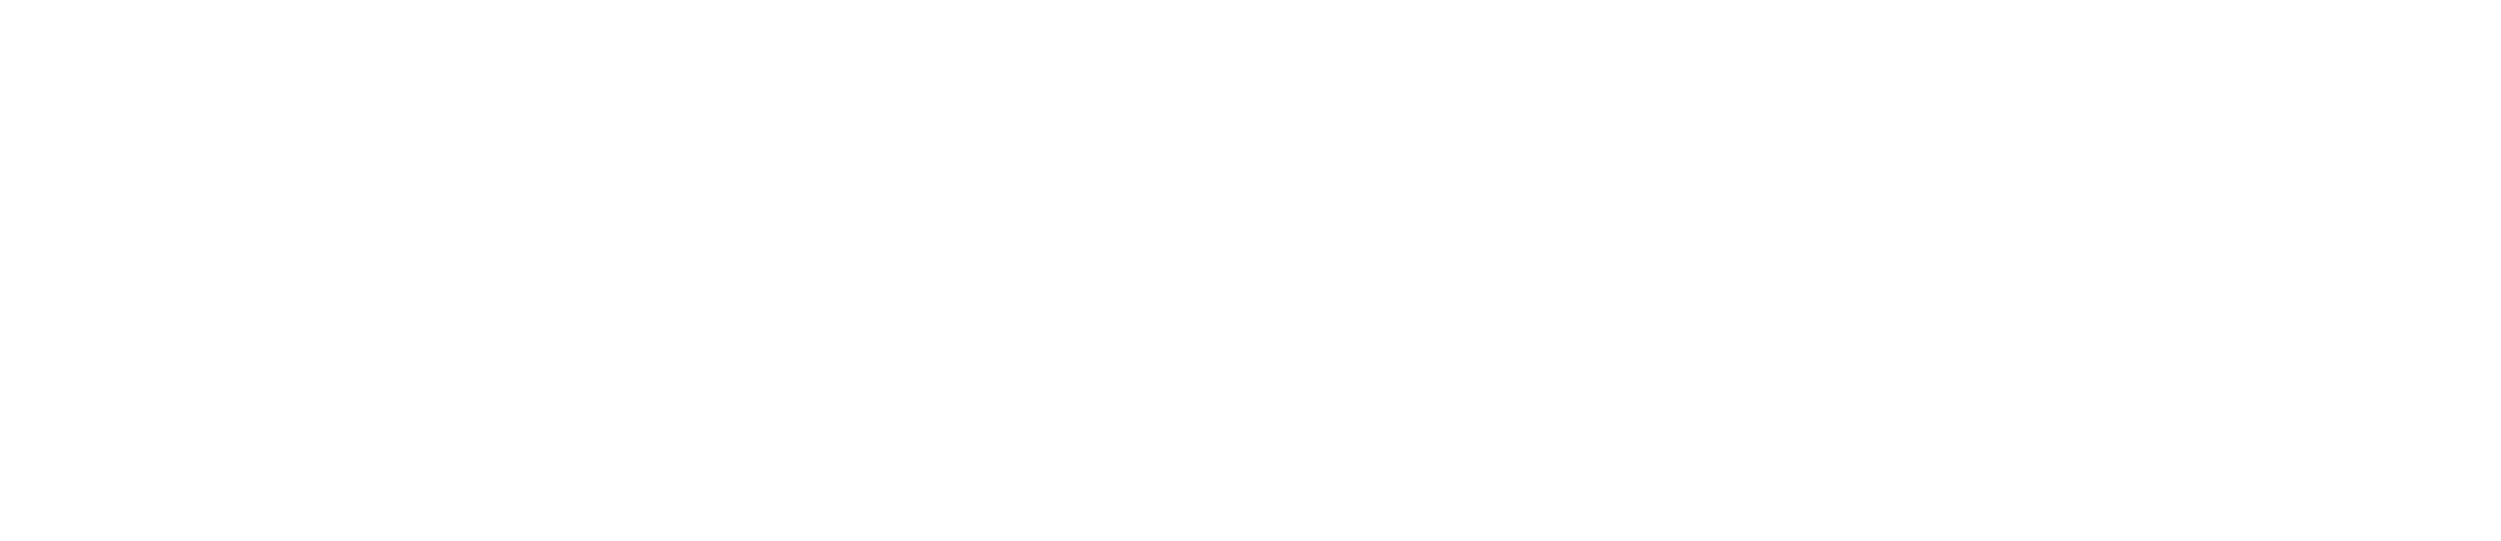 Fresno State Digital Transformation And Innovation Logo